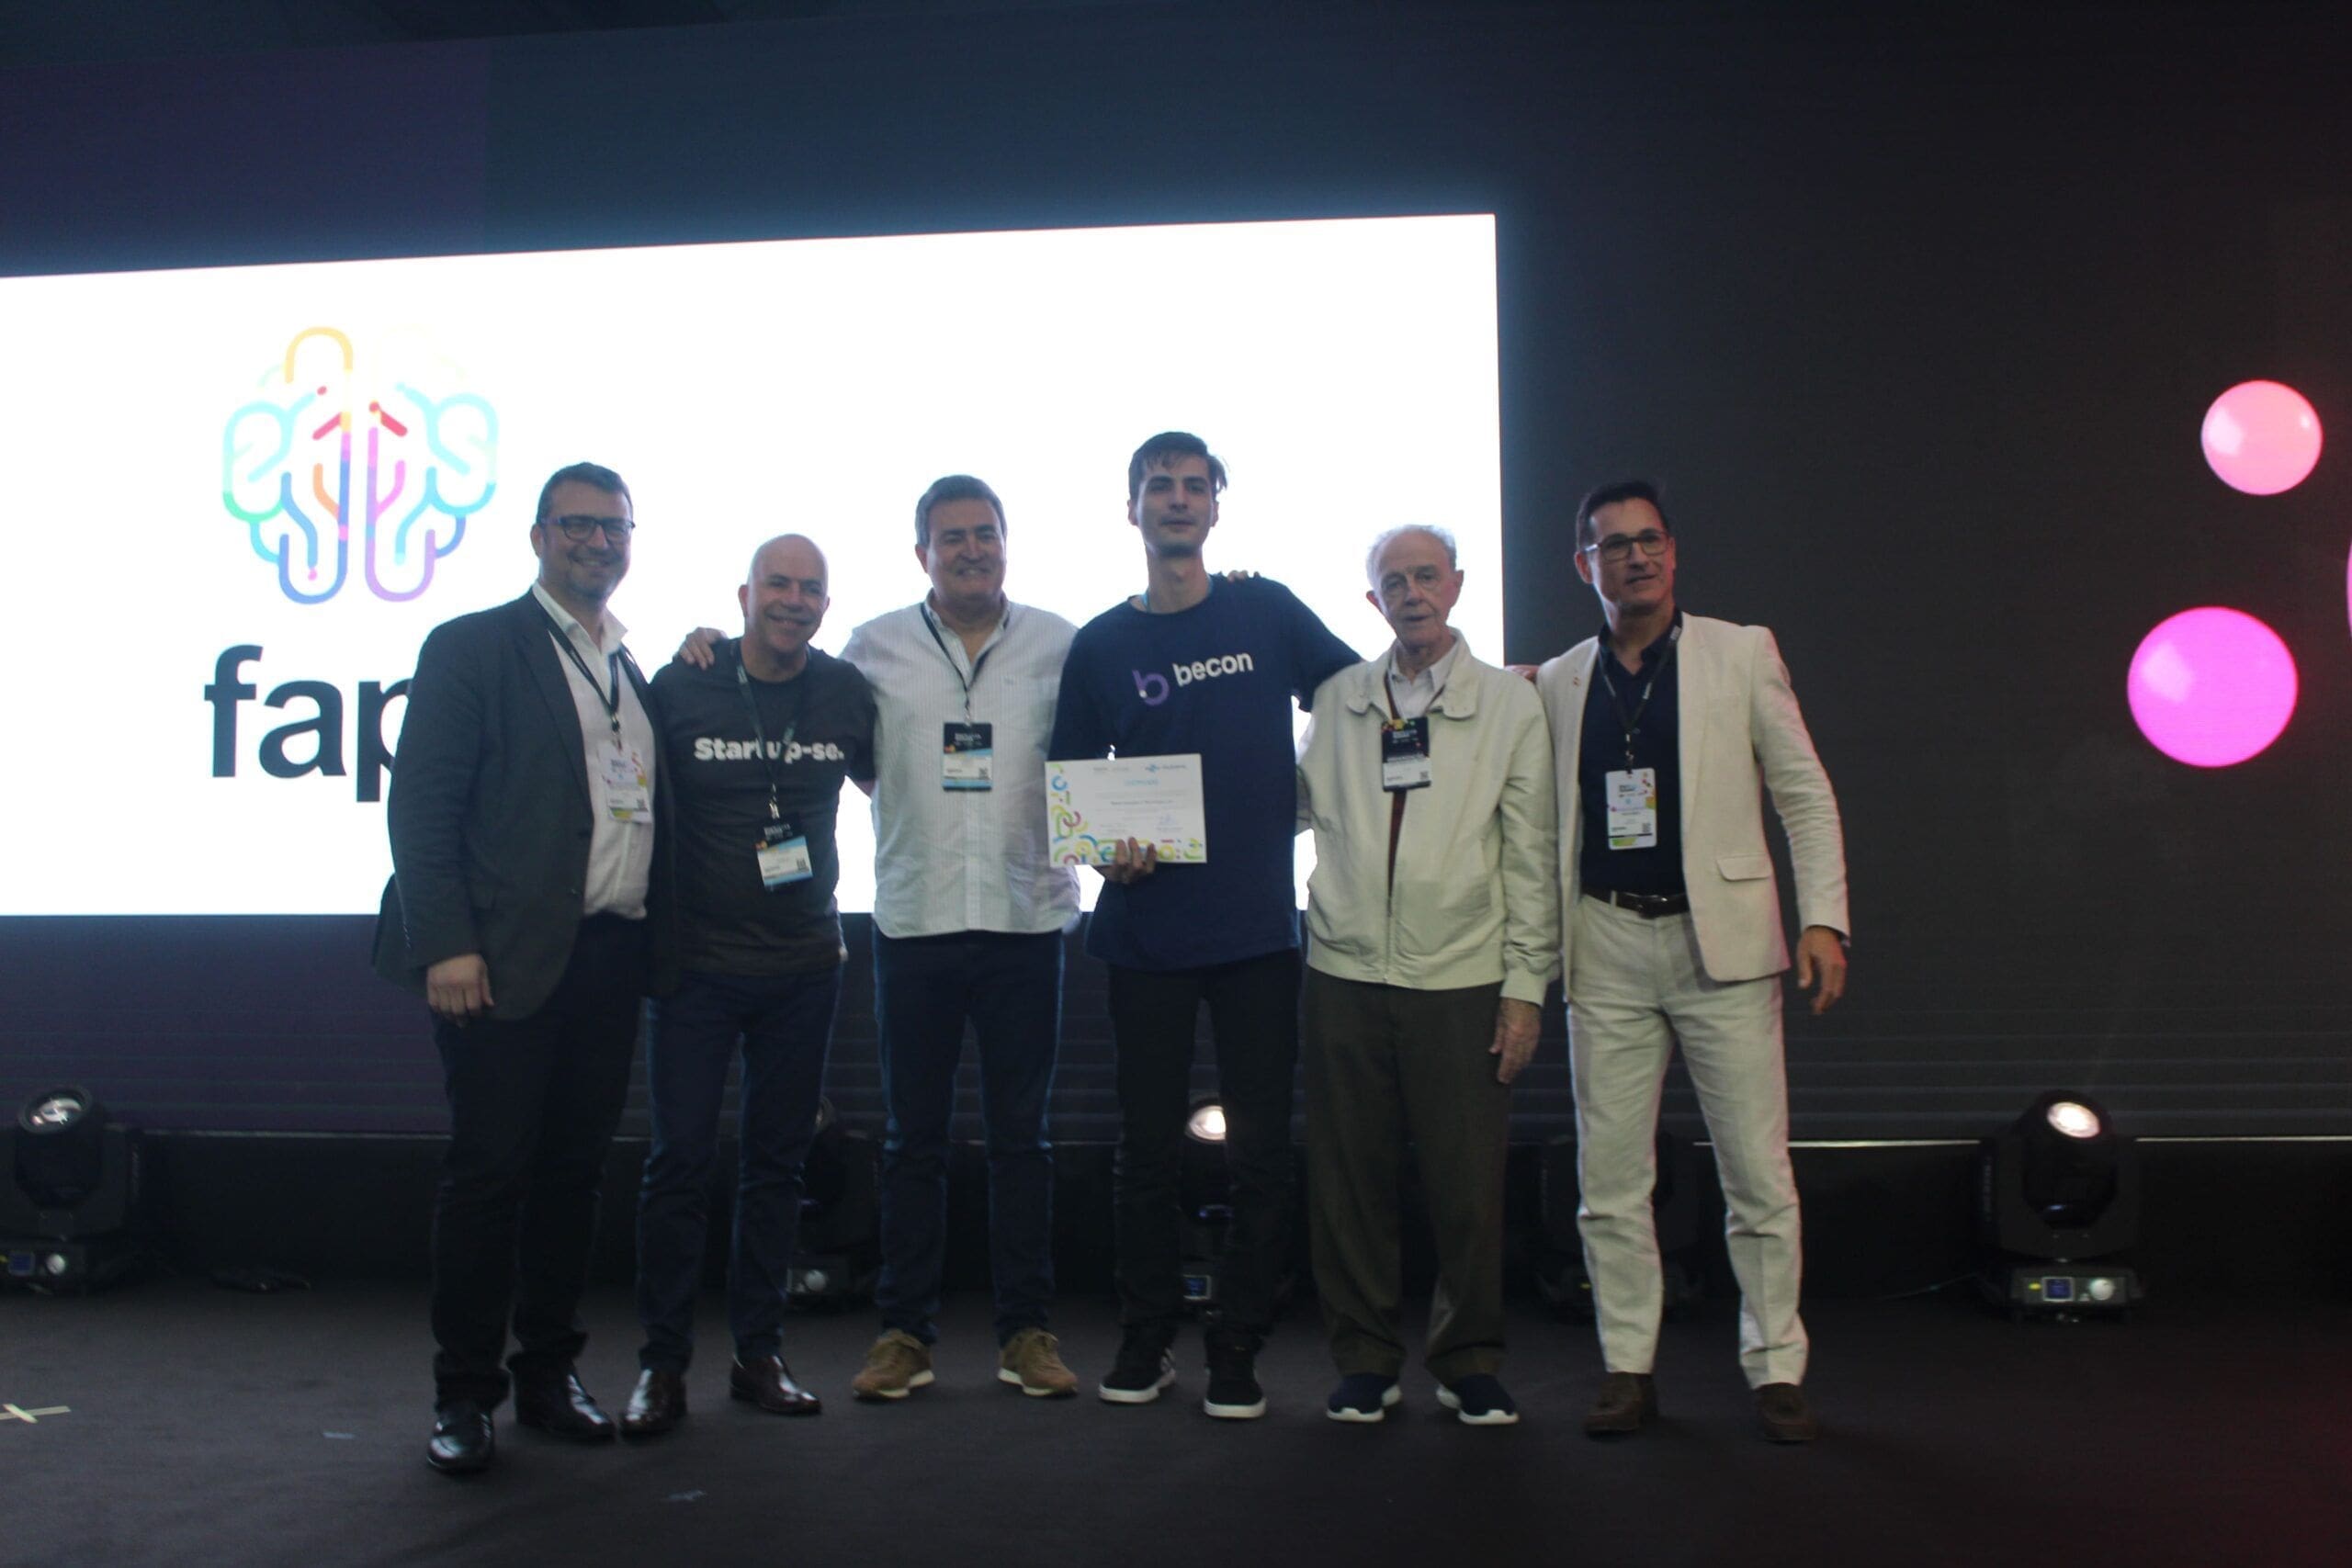 Startup de Joinville Bacon recebe premiacao do Acelera Startup SC scaled